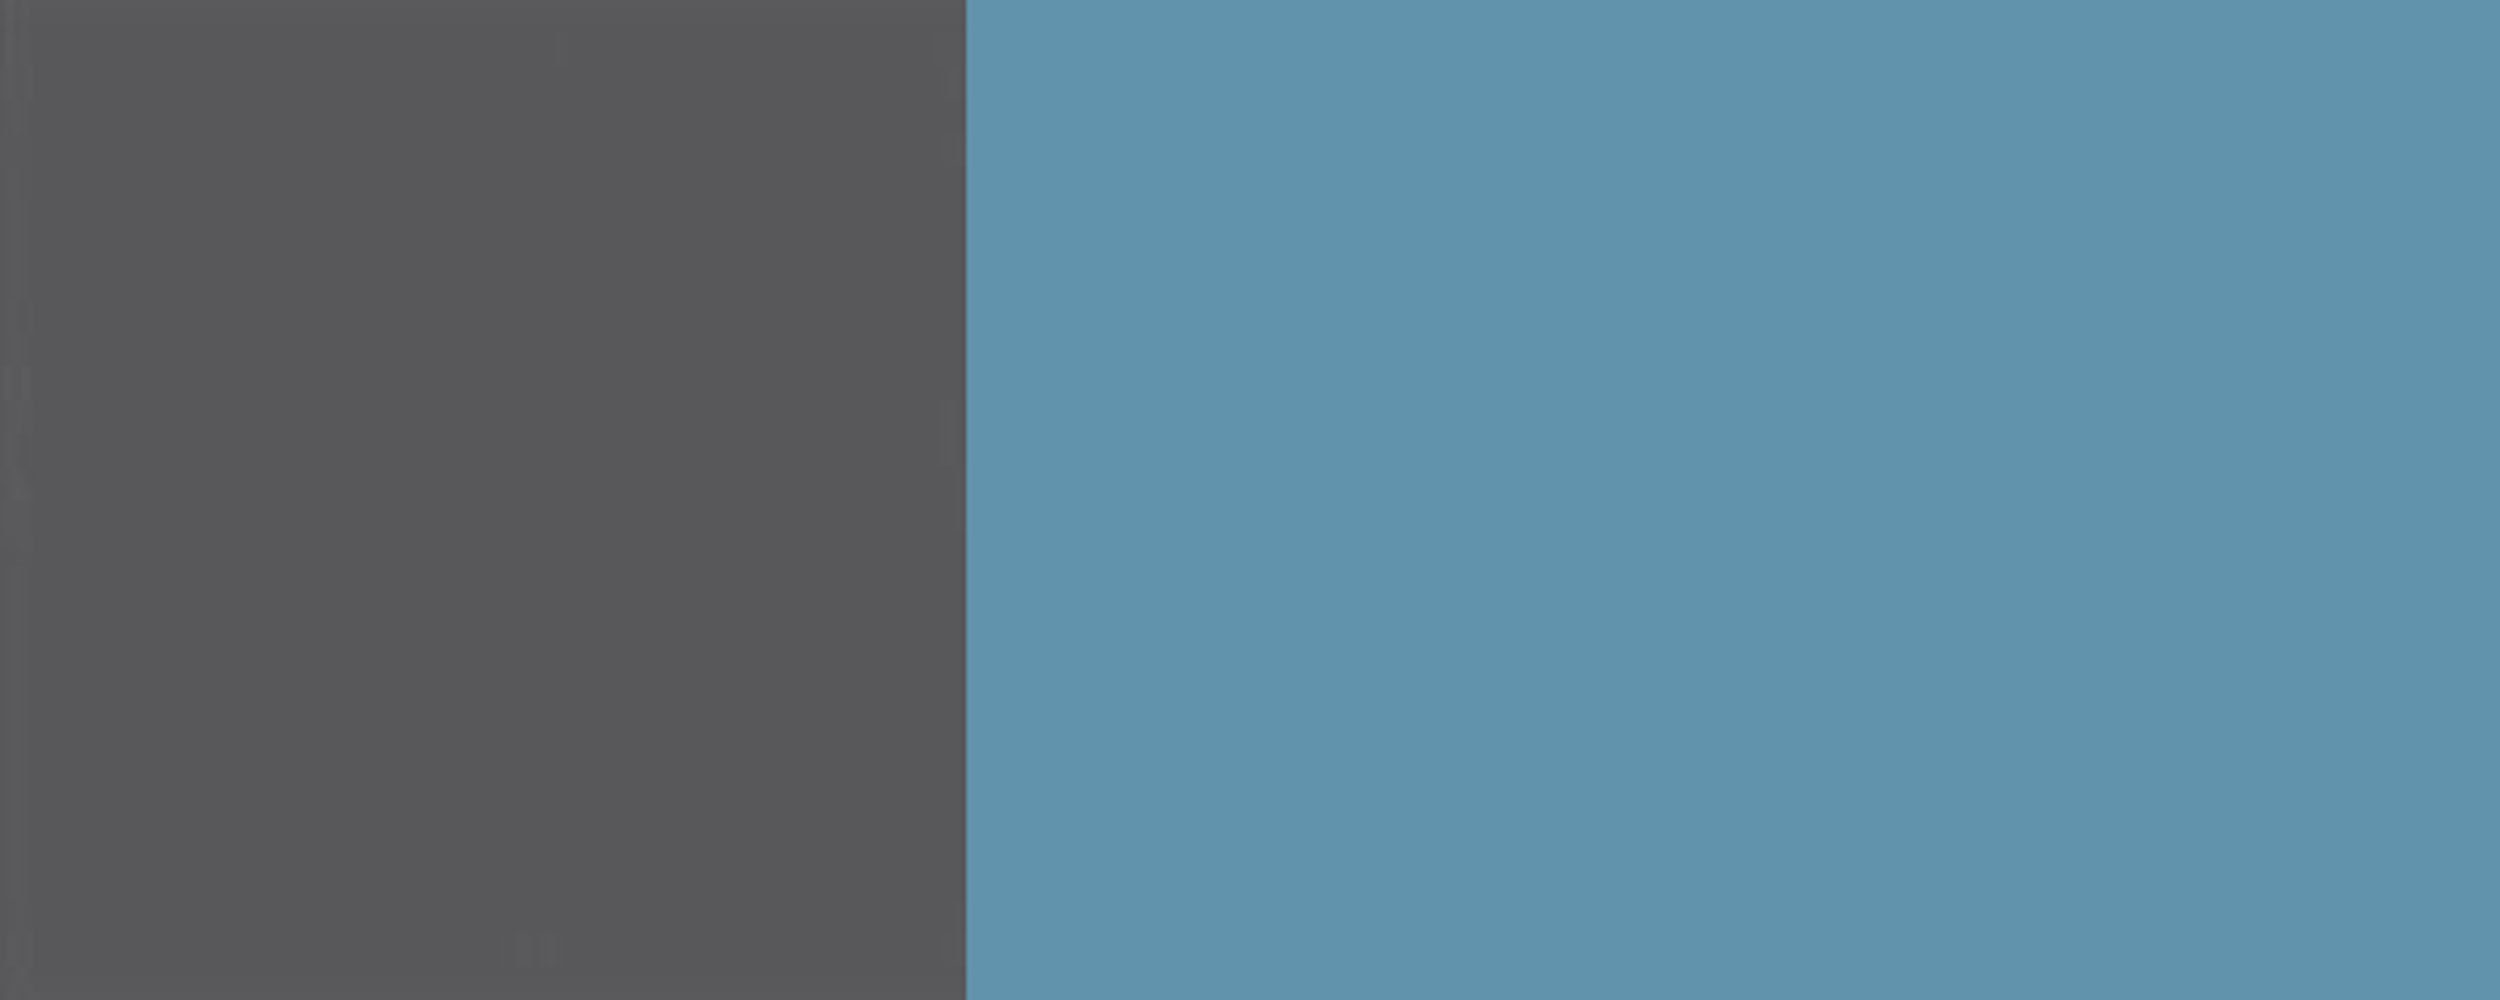 80cm 2-türig Rimini Klapphängeschrank wählbar pastellblau Front- RAL Feldmann-Wohnen (Rimini) 5024 matt Korpusfarbe und